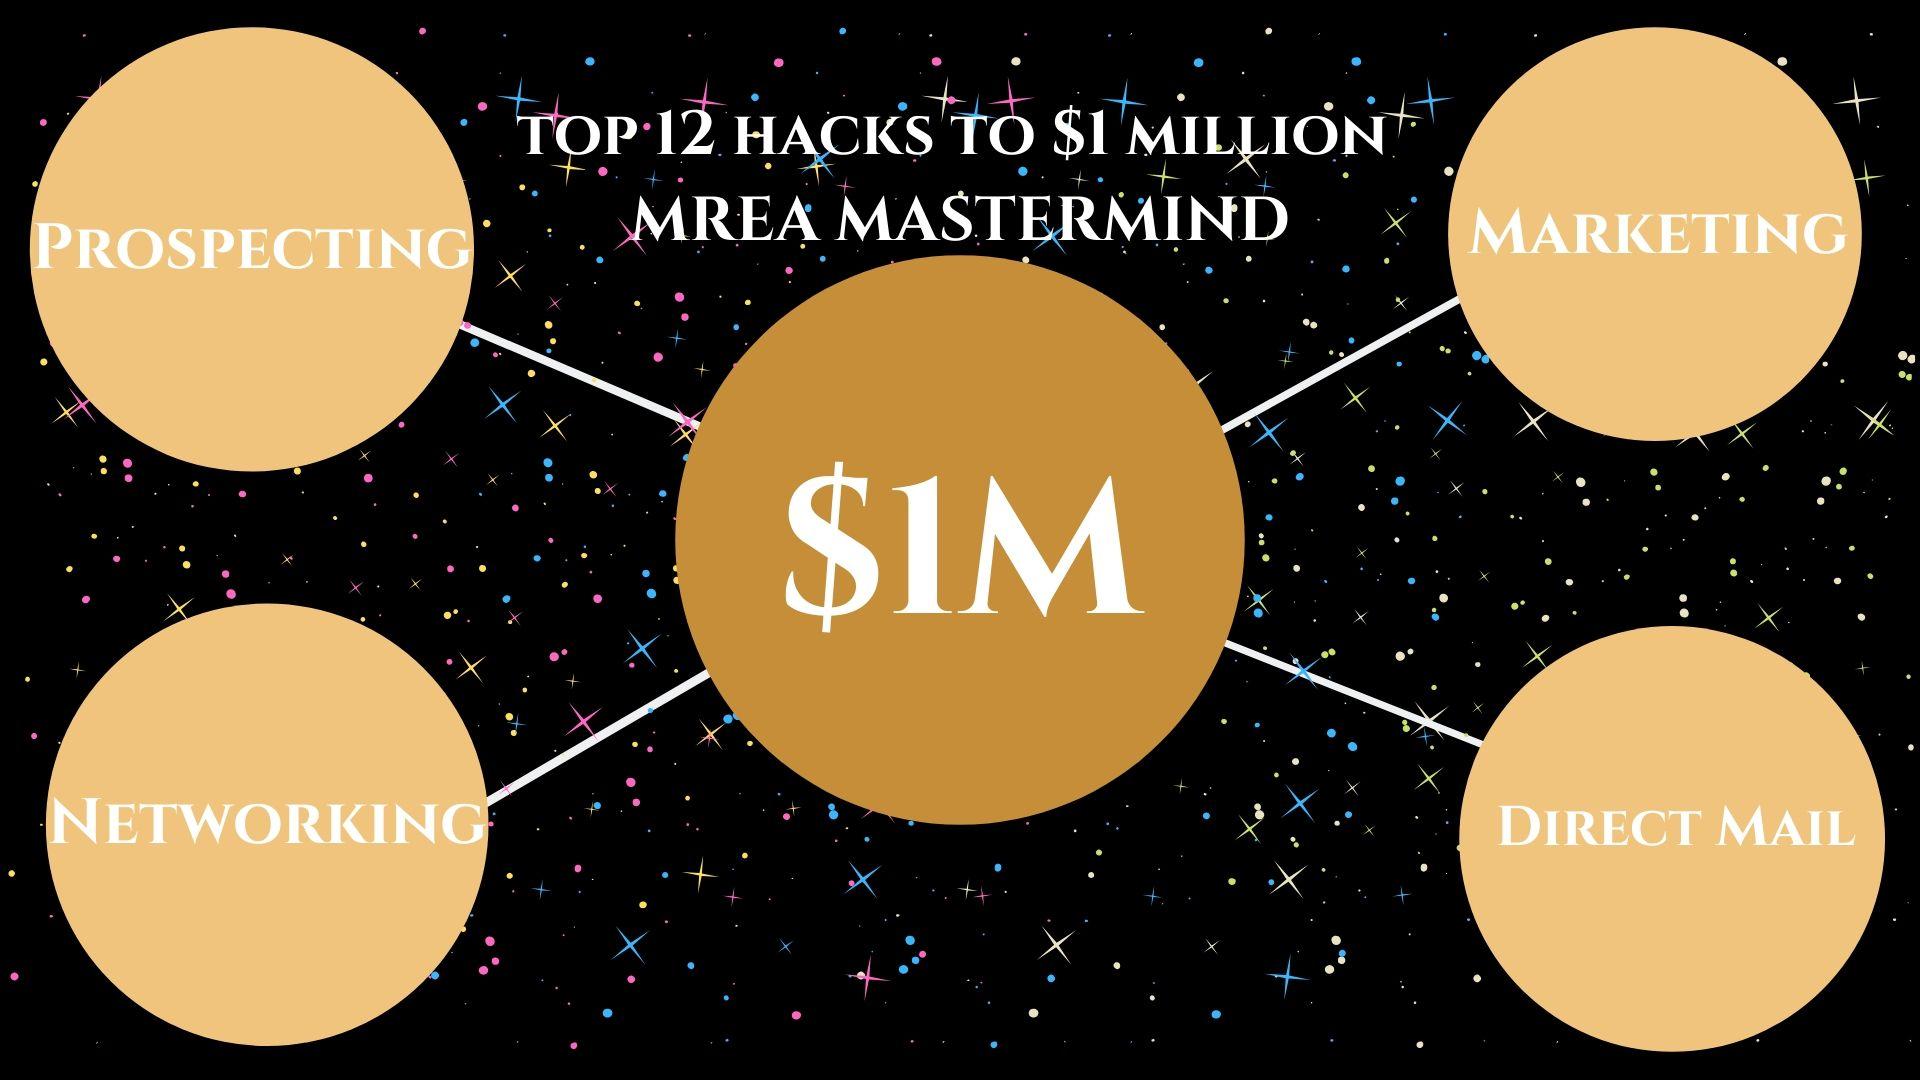 Top 12 Hacks to $1M Mastermind